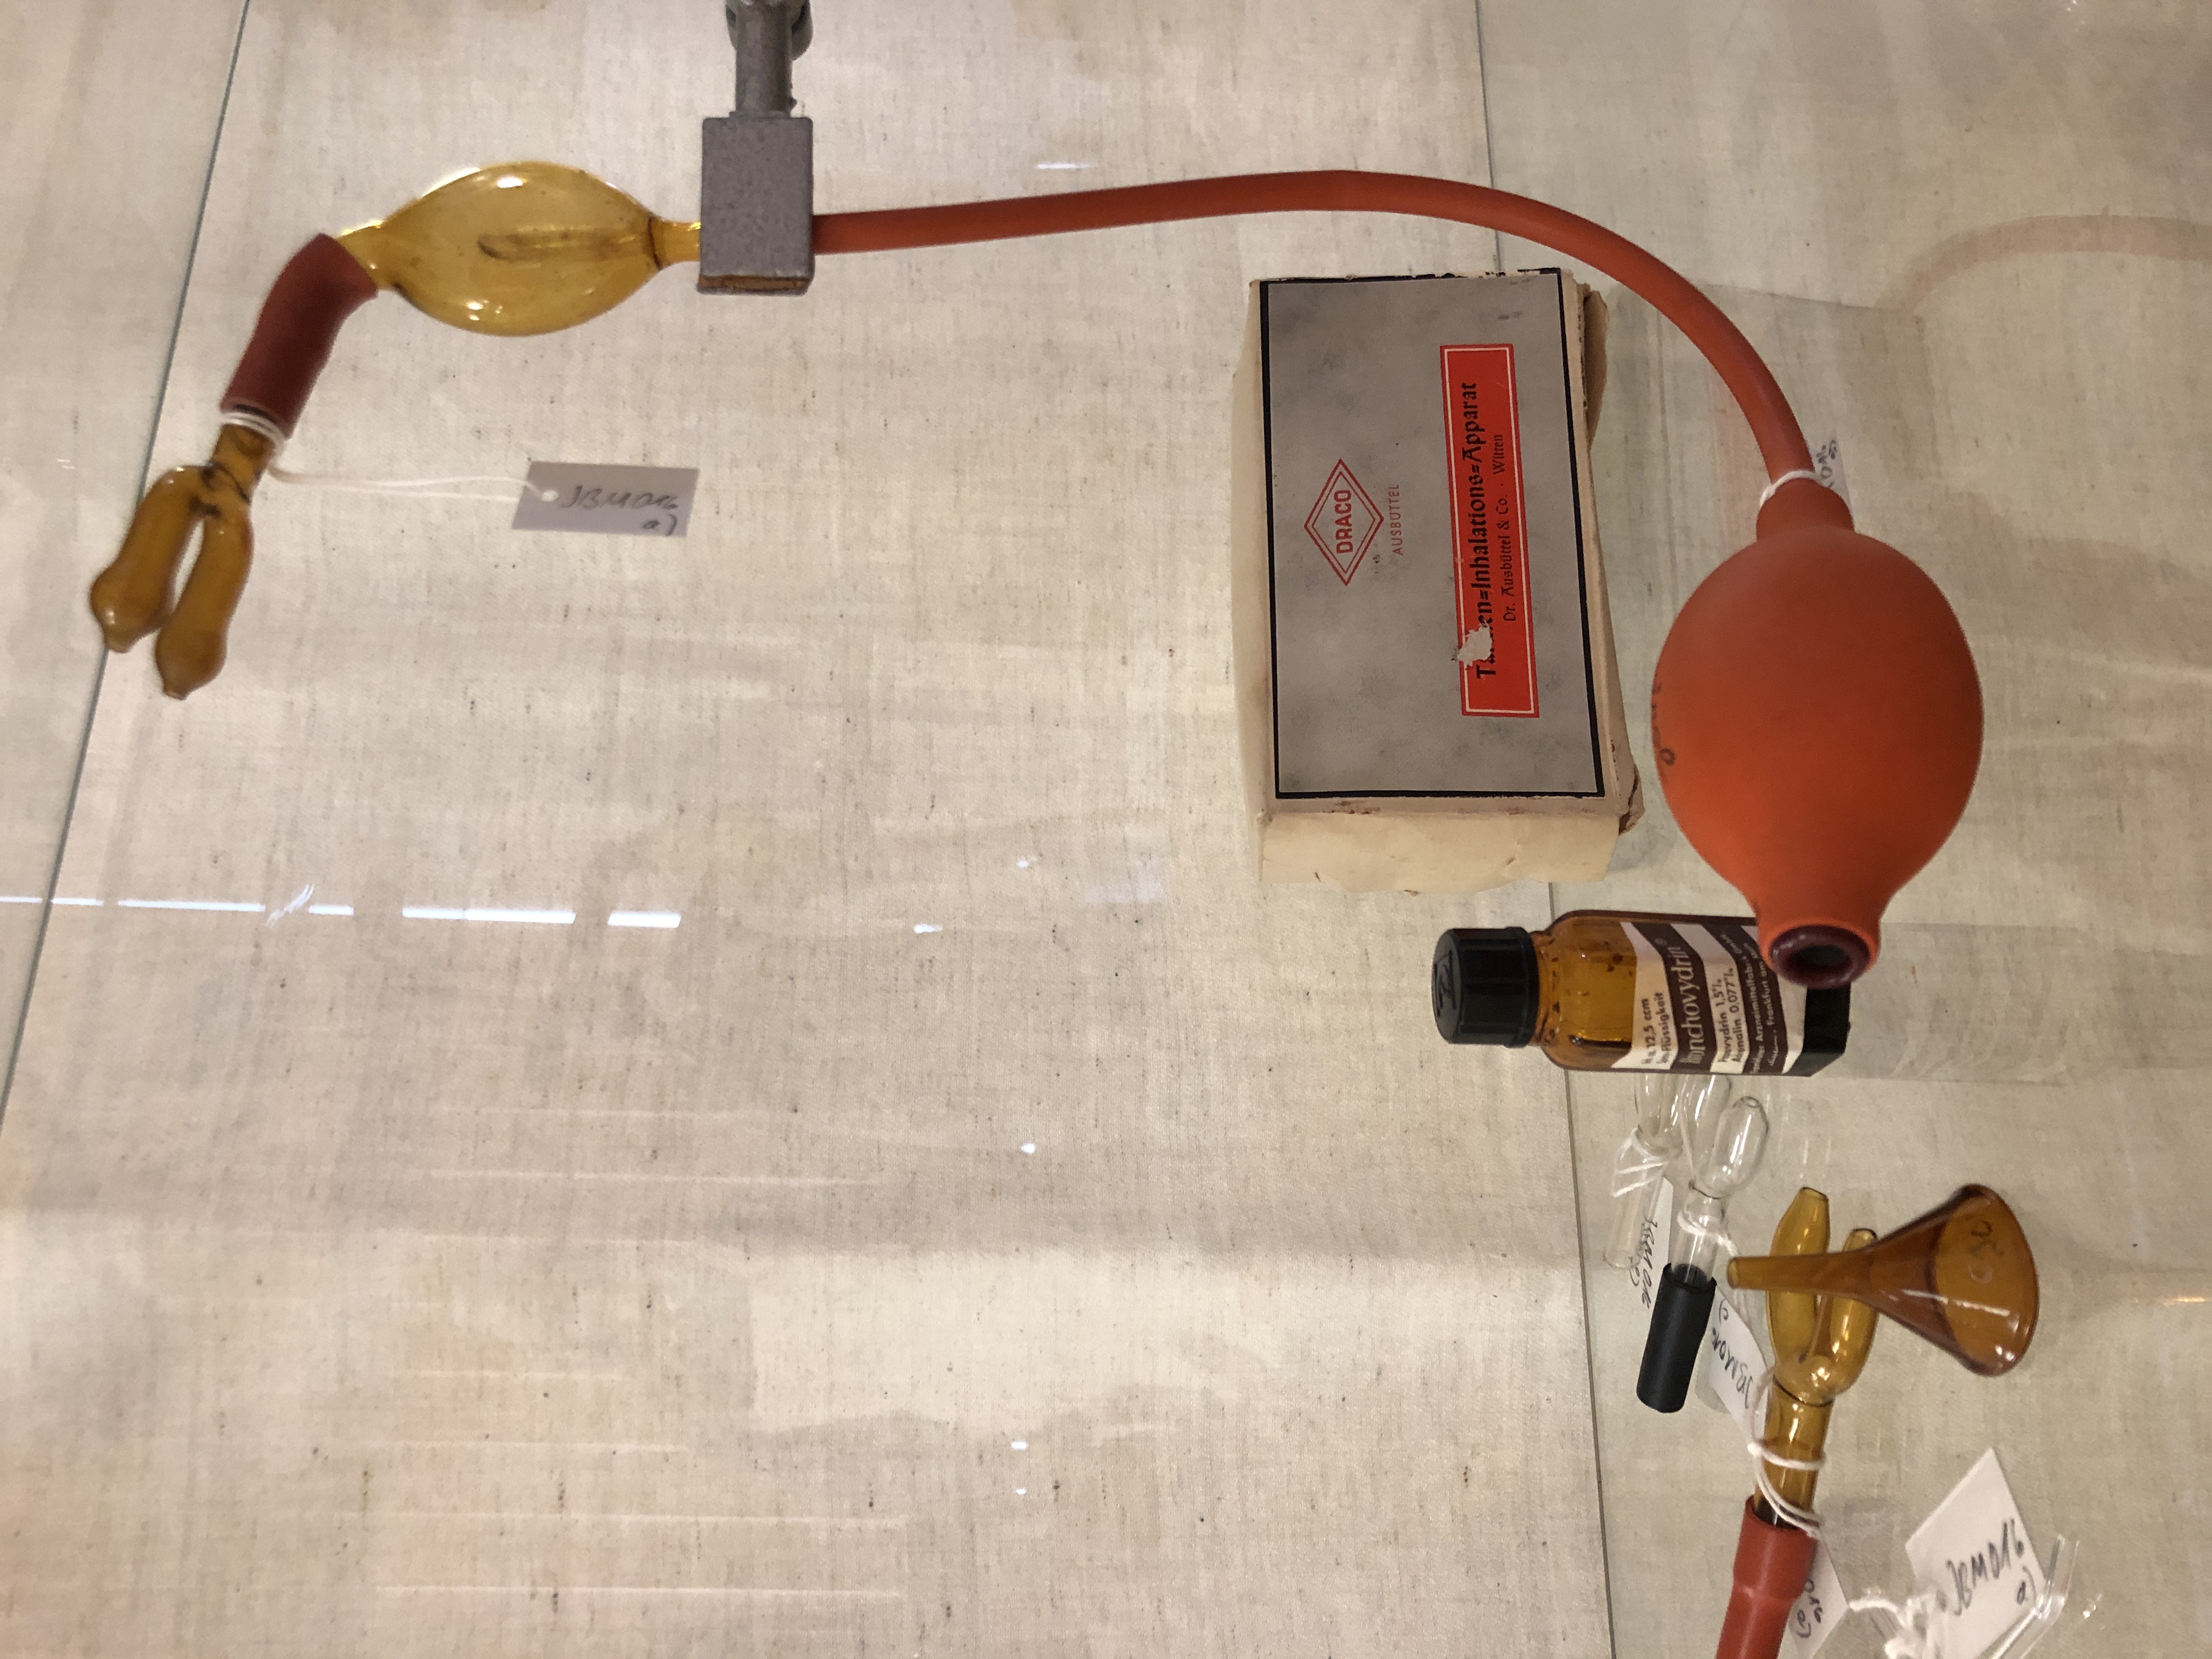 Taschen-Inhalations-Apparat Arrangement (Krankenhausmuseum Bielefeld e.V. CC BY-NC-SA)